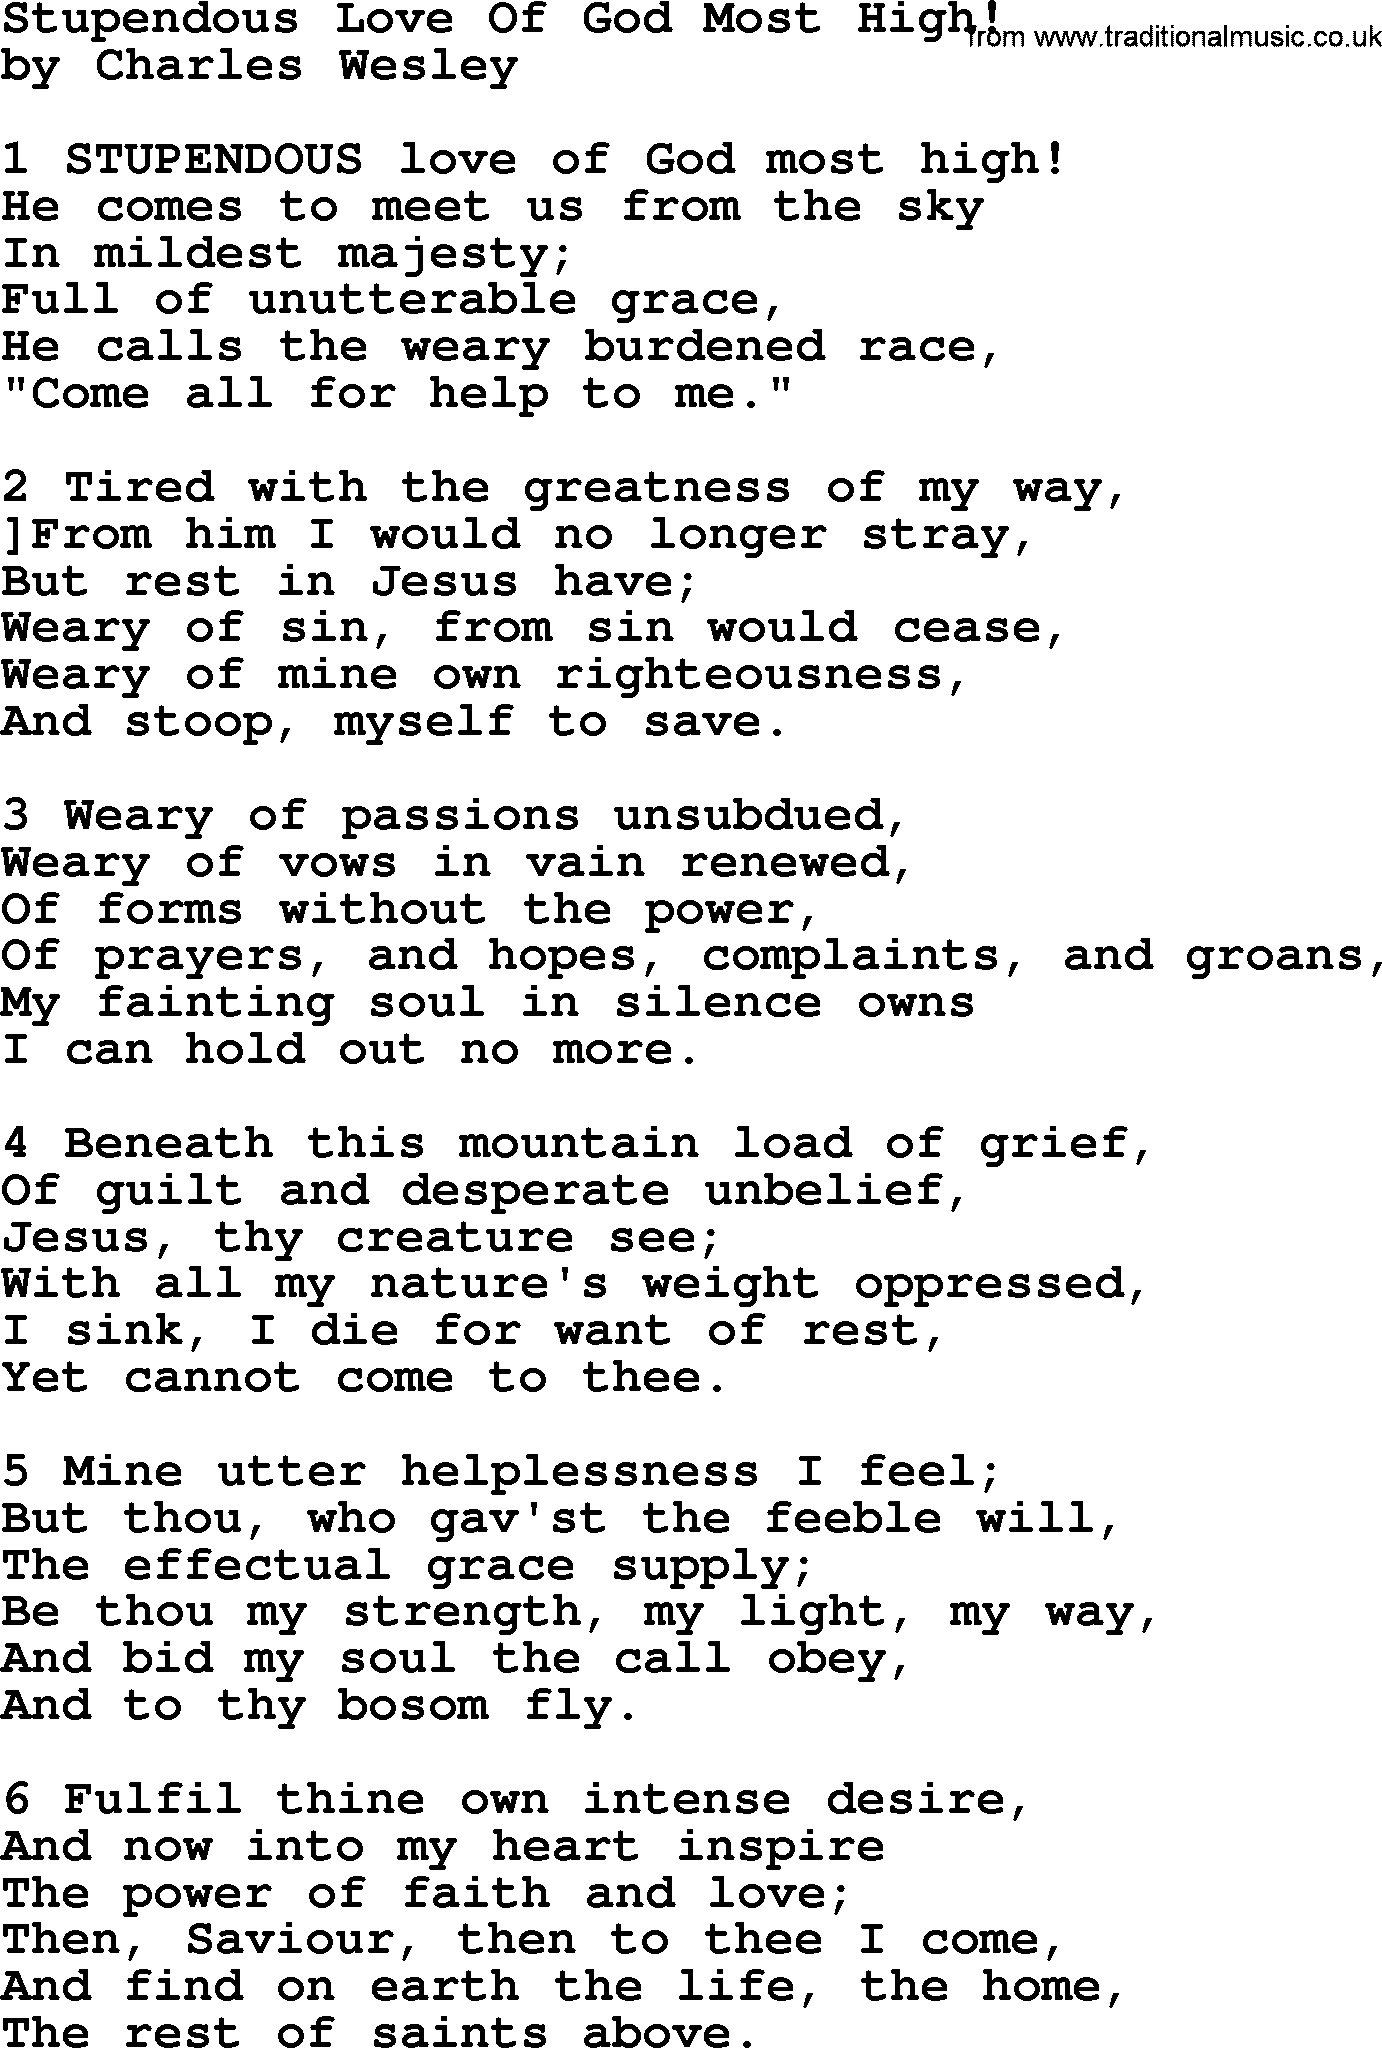 Charles Wesley hymn: Stupendous Love Of God Most High!, lyrics